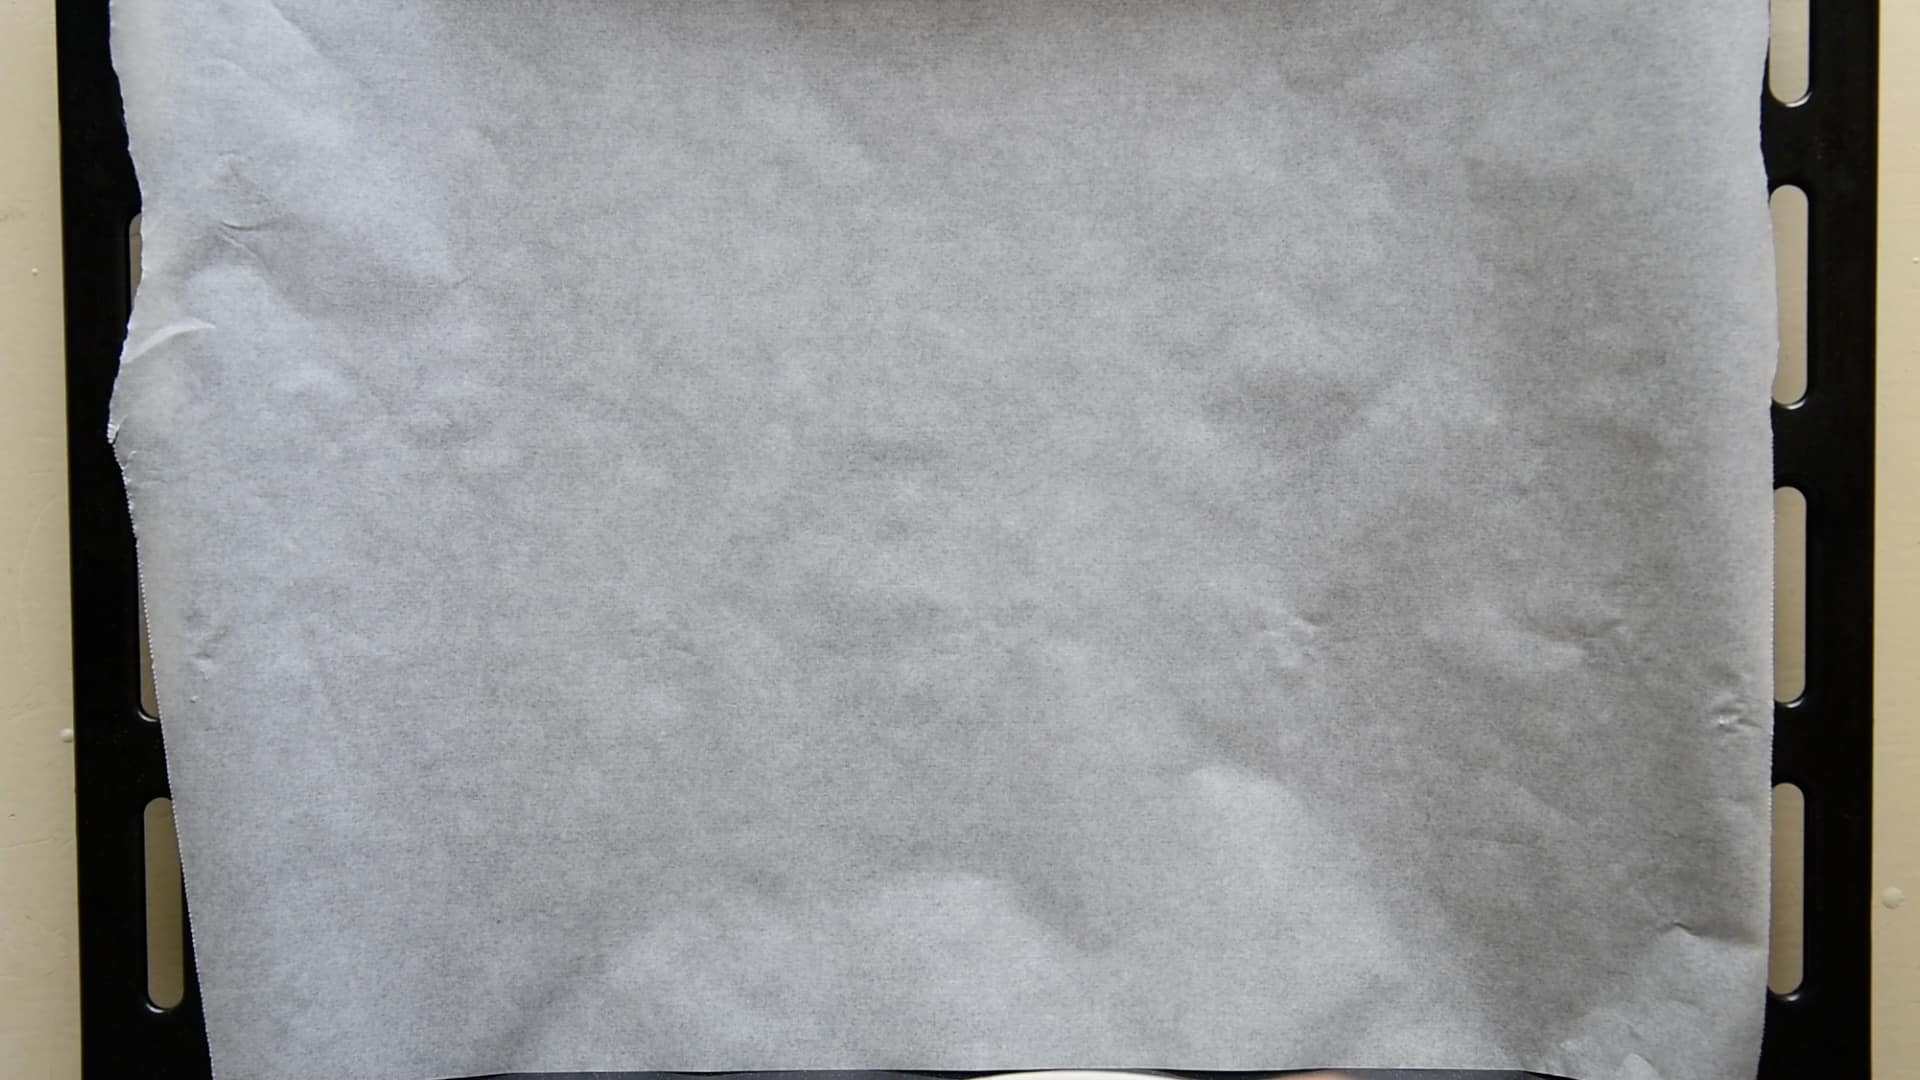 parchment paper over a baking pan